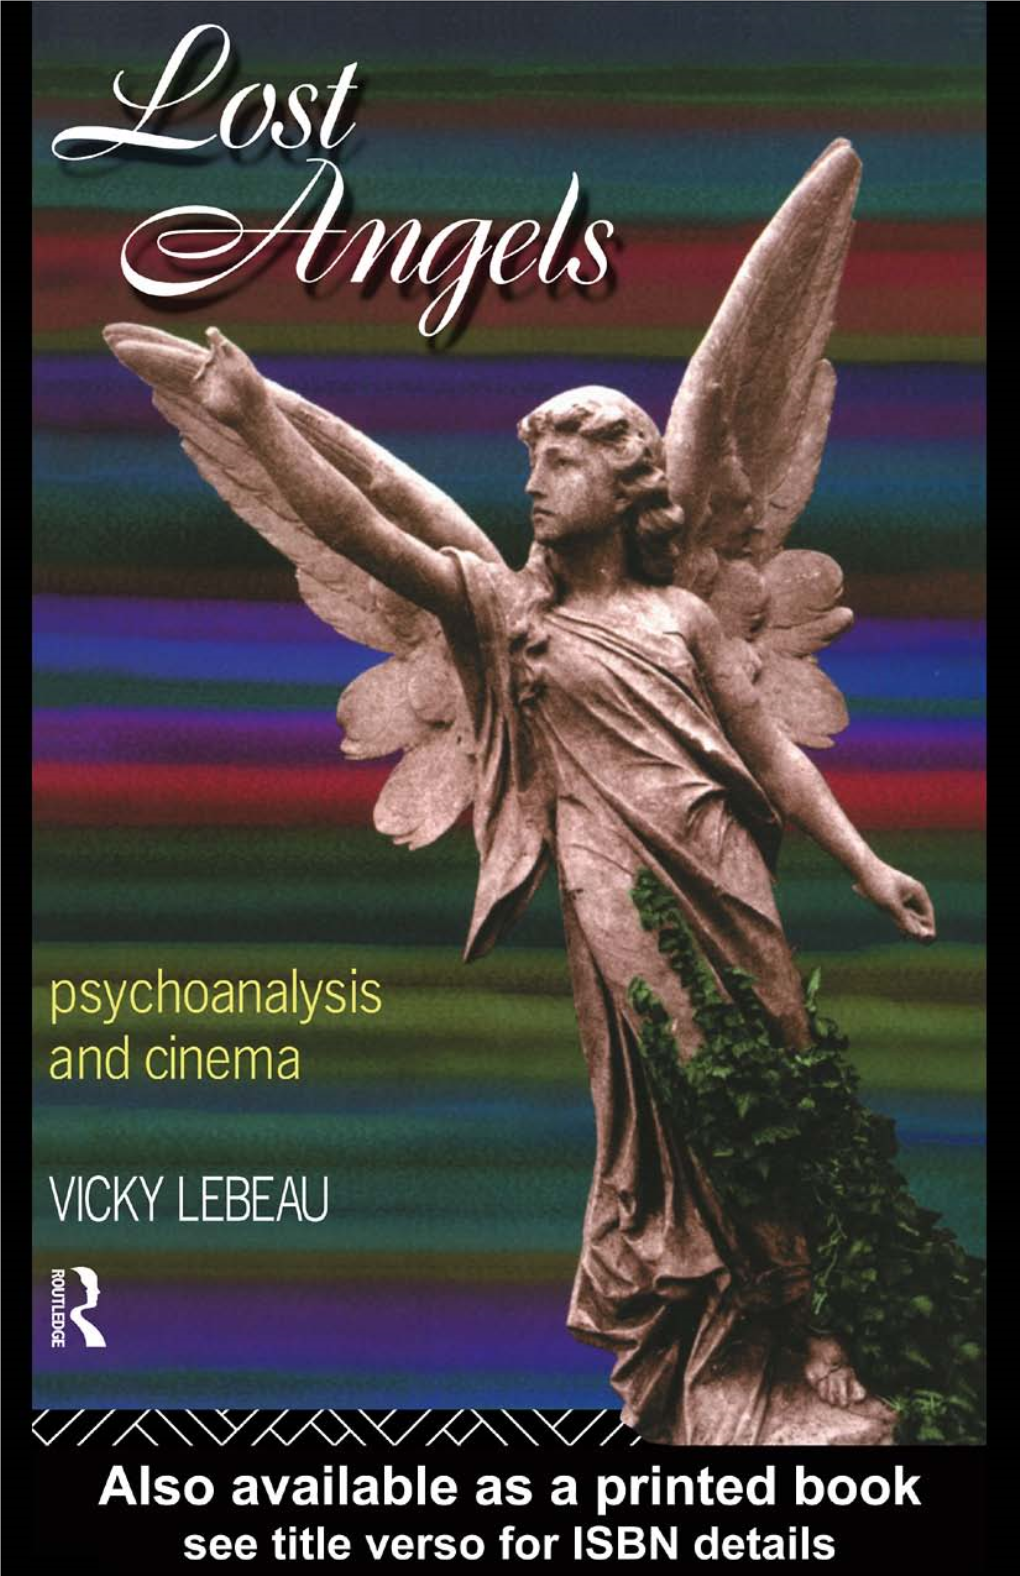 Lost Angels: Psychoanalysis and Cinema/Vicky Lebeau